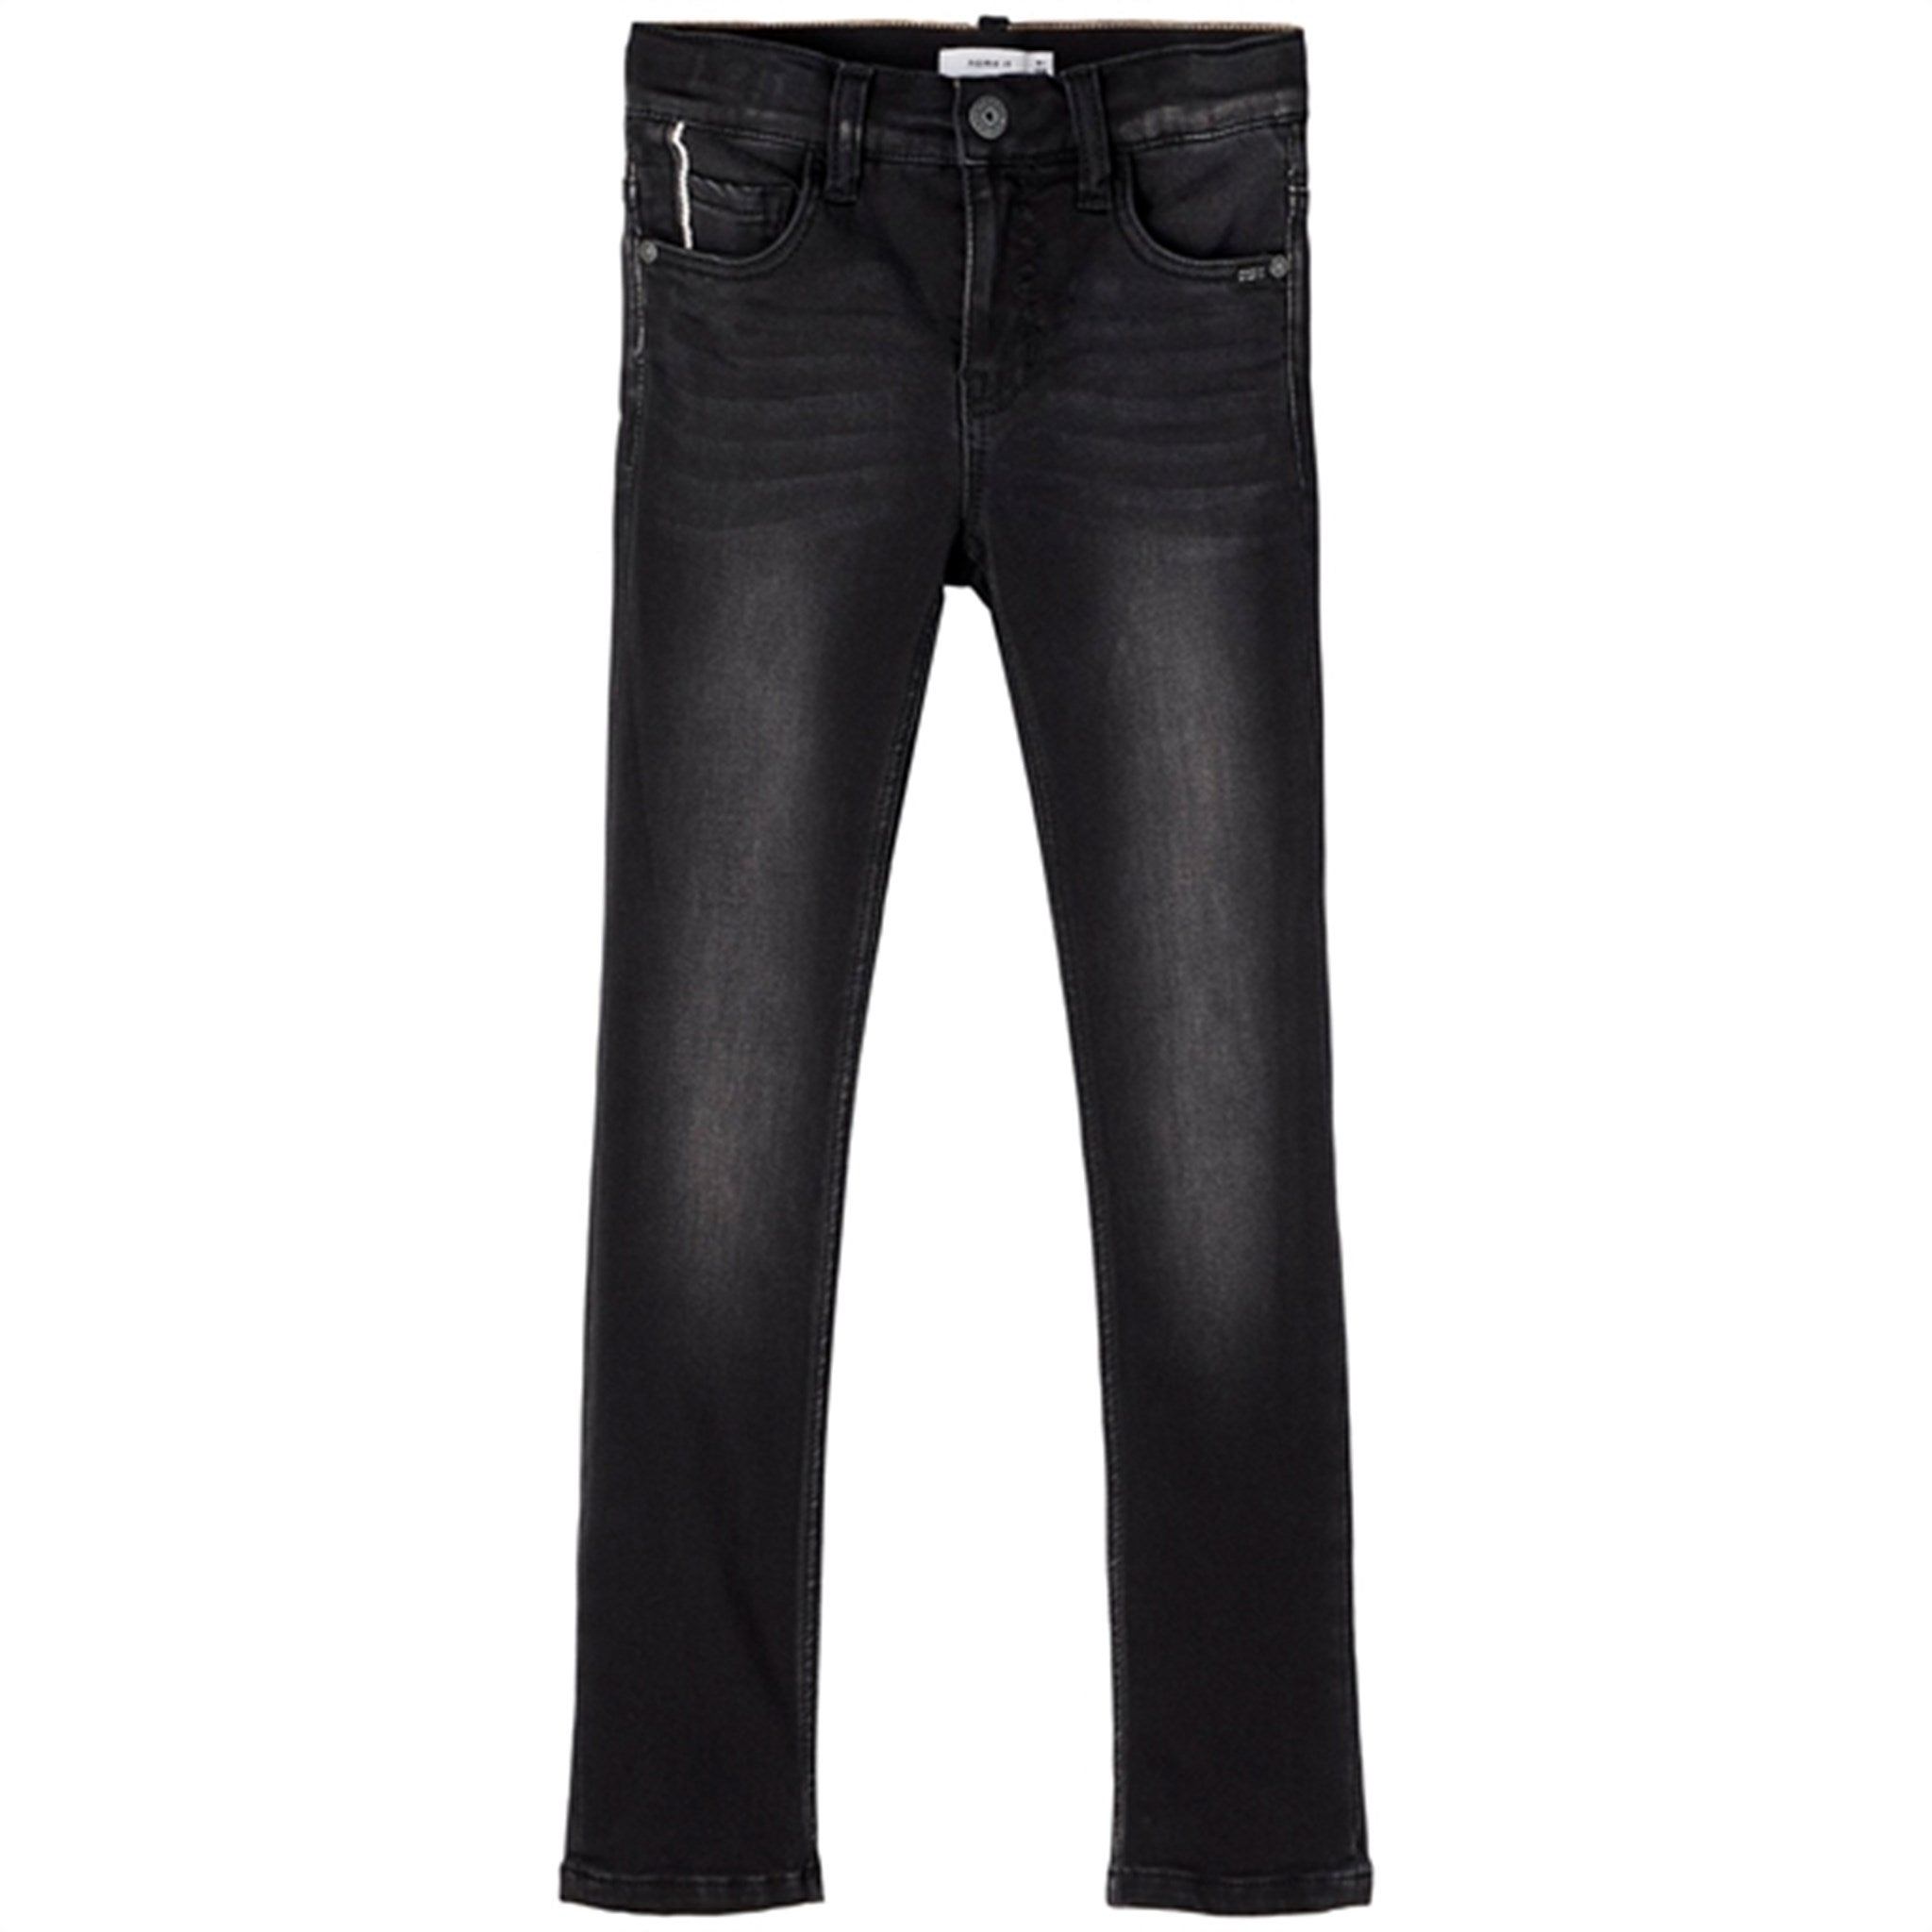 Name it Black Denim Theo X-slim NOOS Jeans